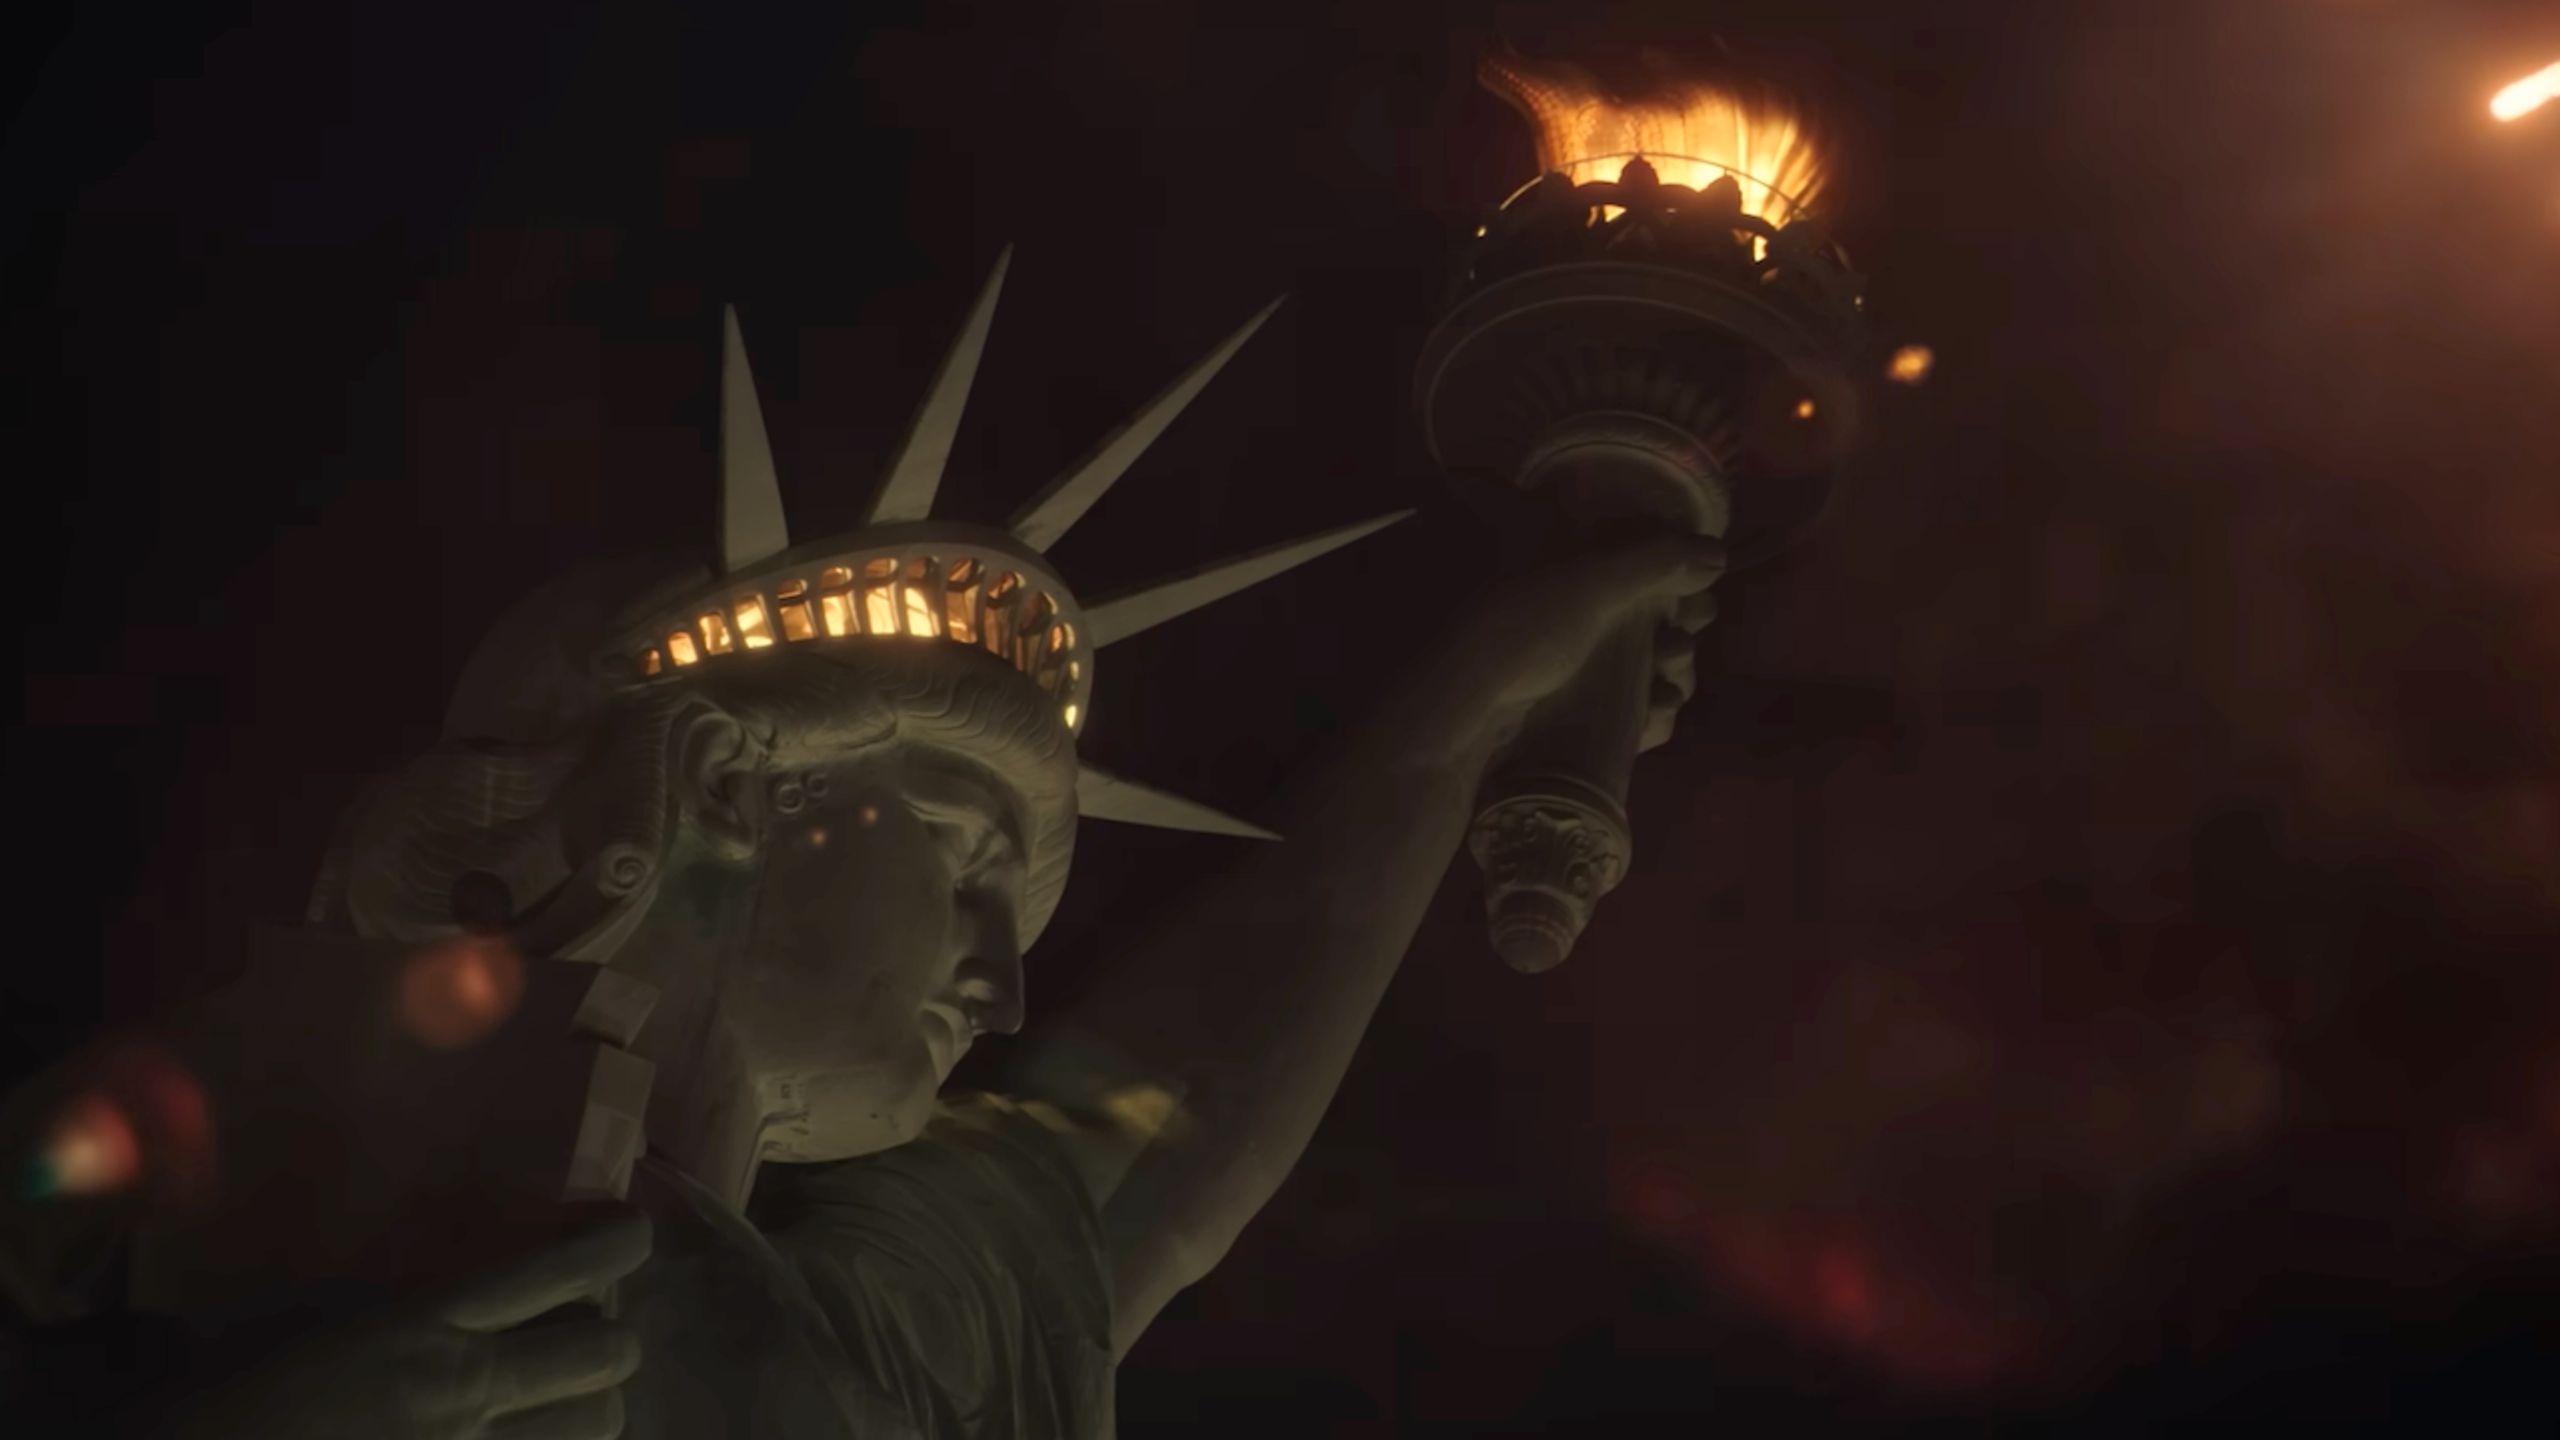 La Estatua de la Libertad iluminada por el fuego en una imagen de 'Megalópolis', de Francis Ford Coppola